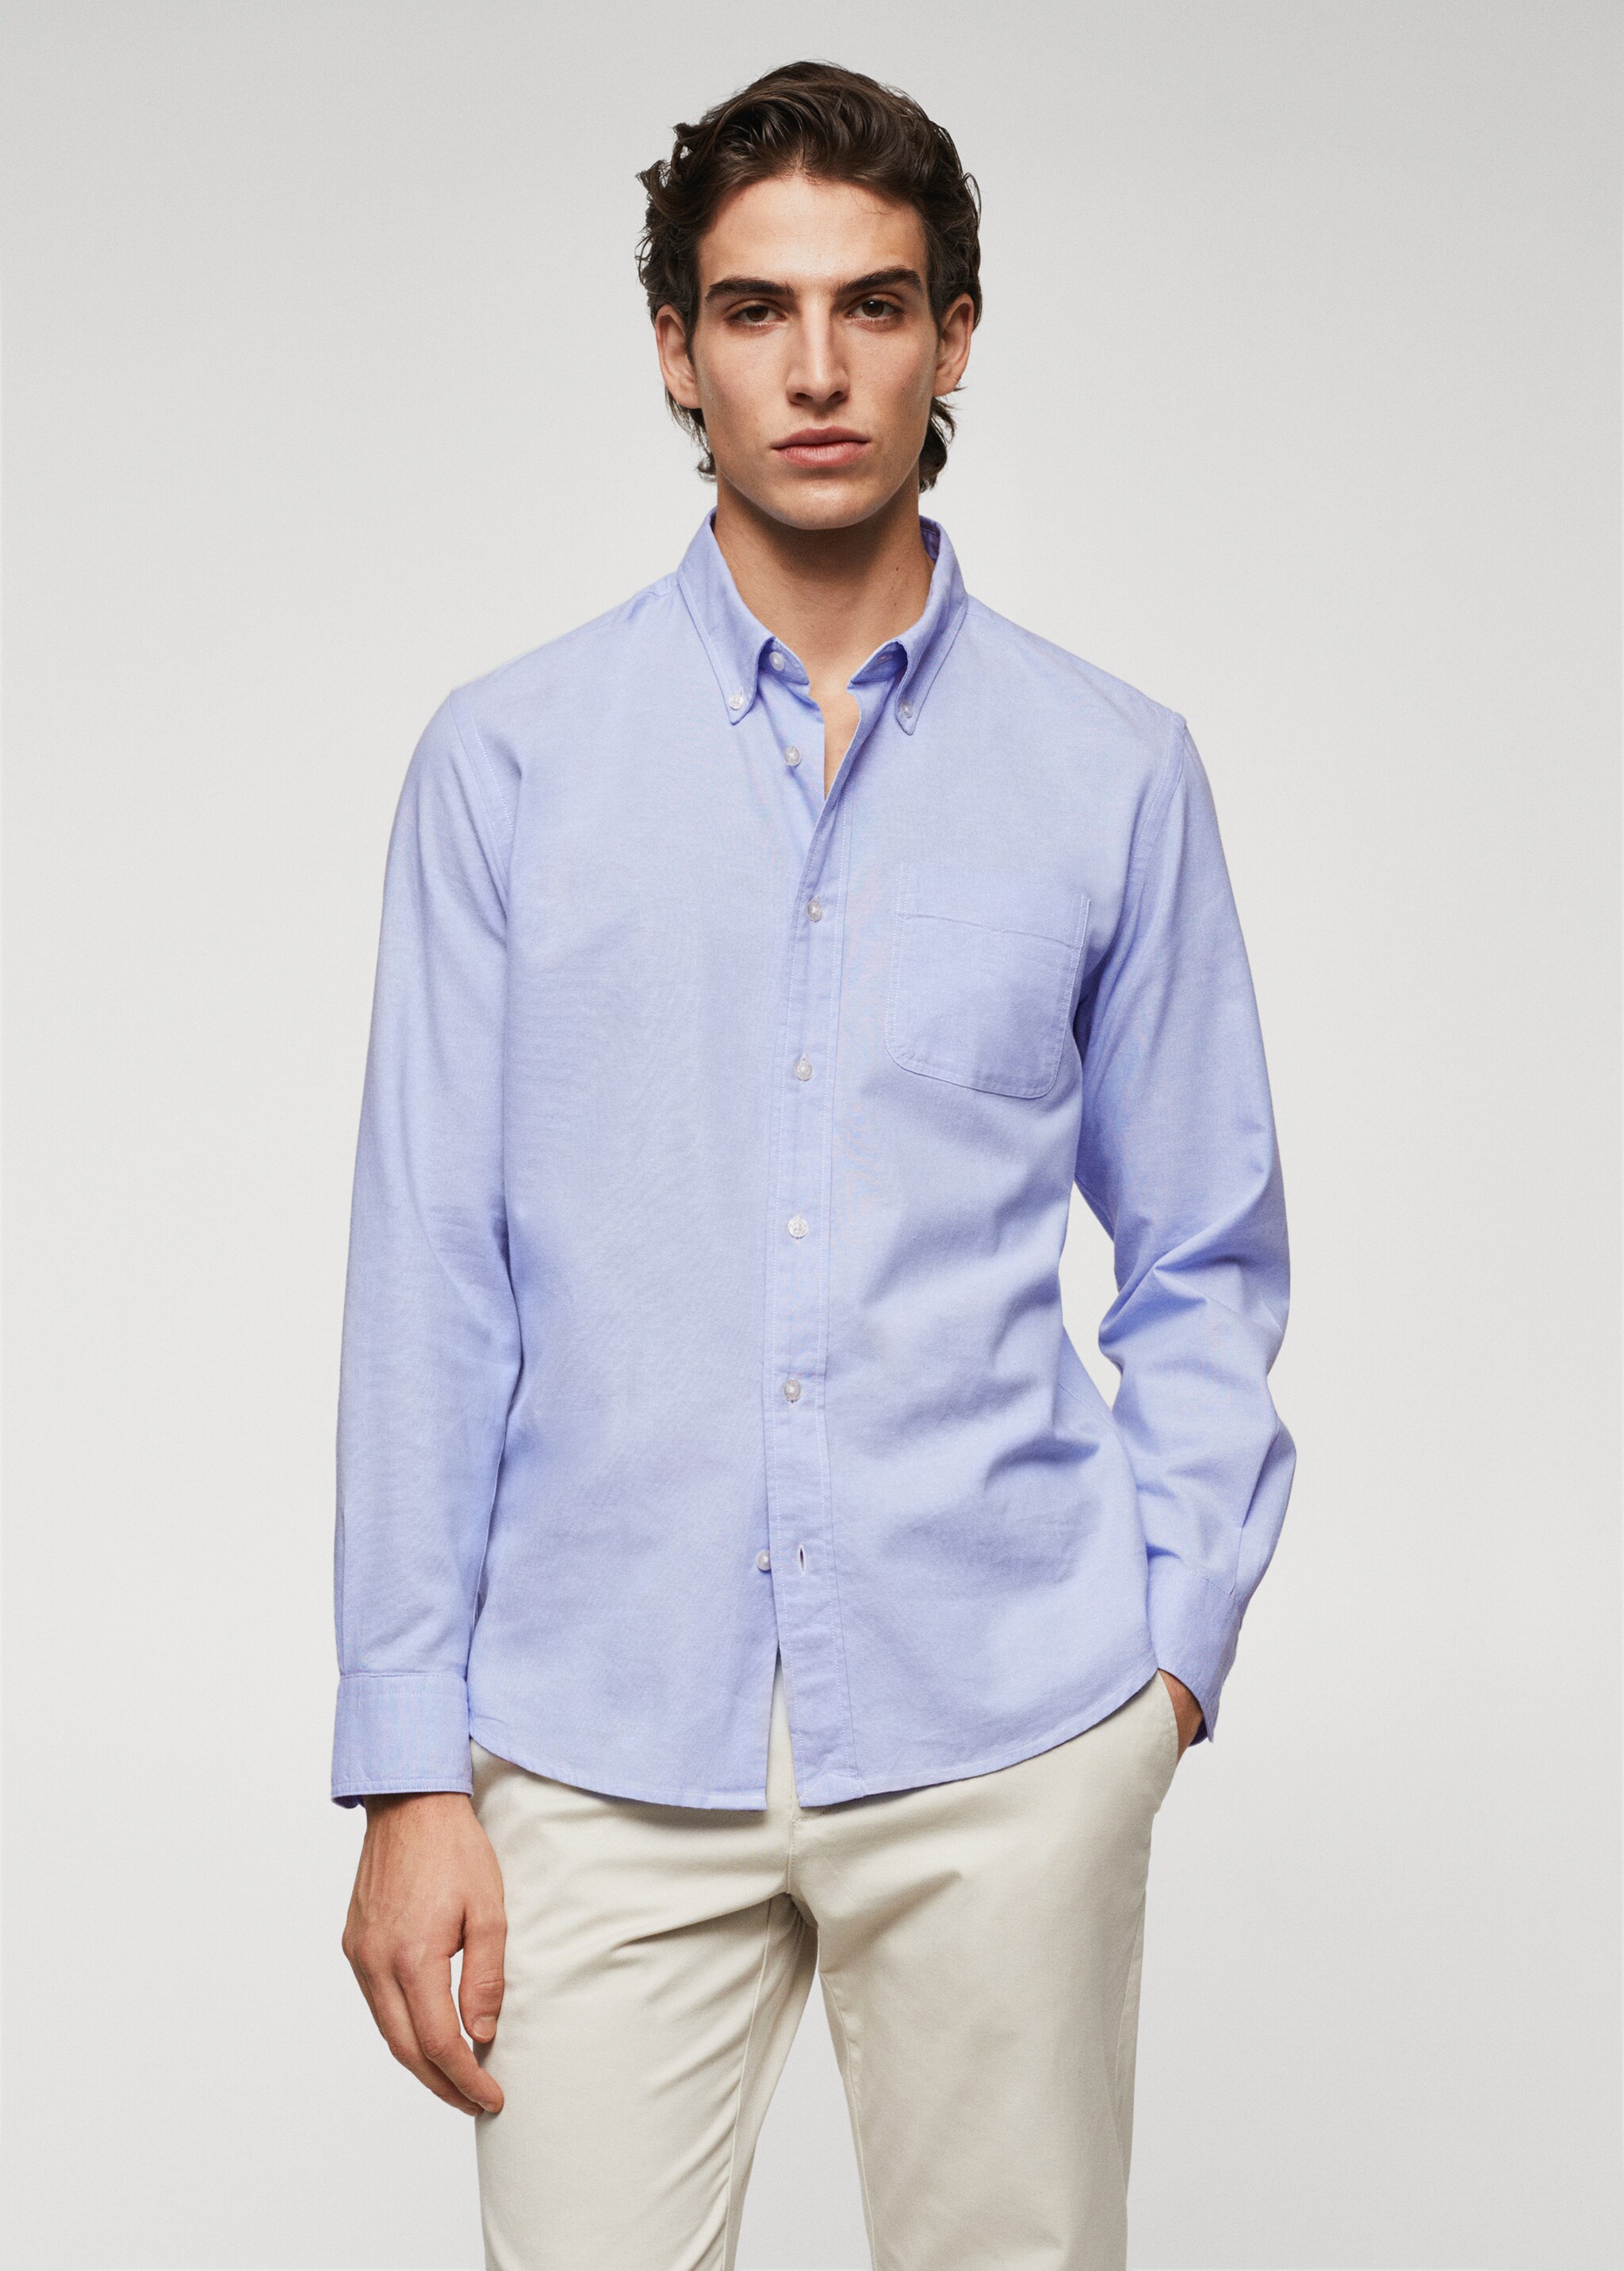 Regular fit Oxford cotton shirt - Medium plane